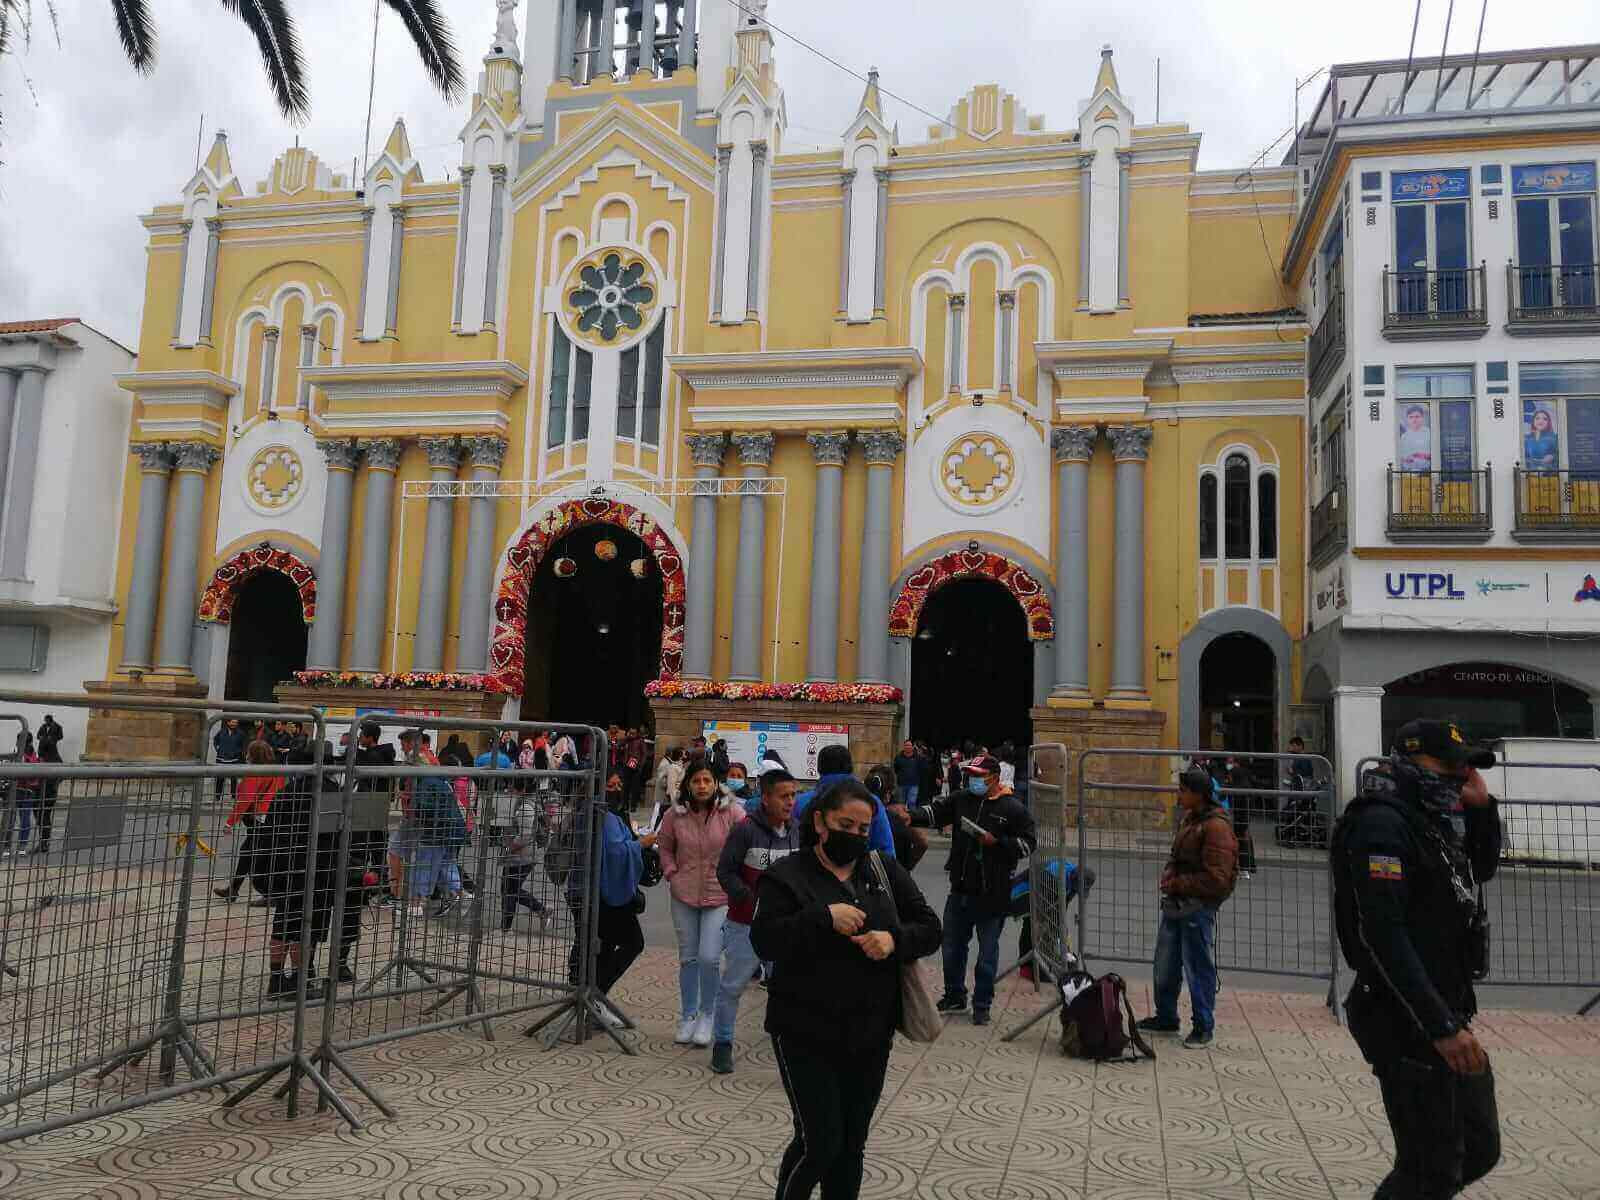 Ventas informales rondan la iglesia Catedral de Loja